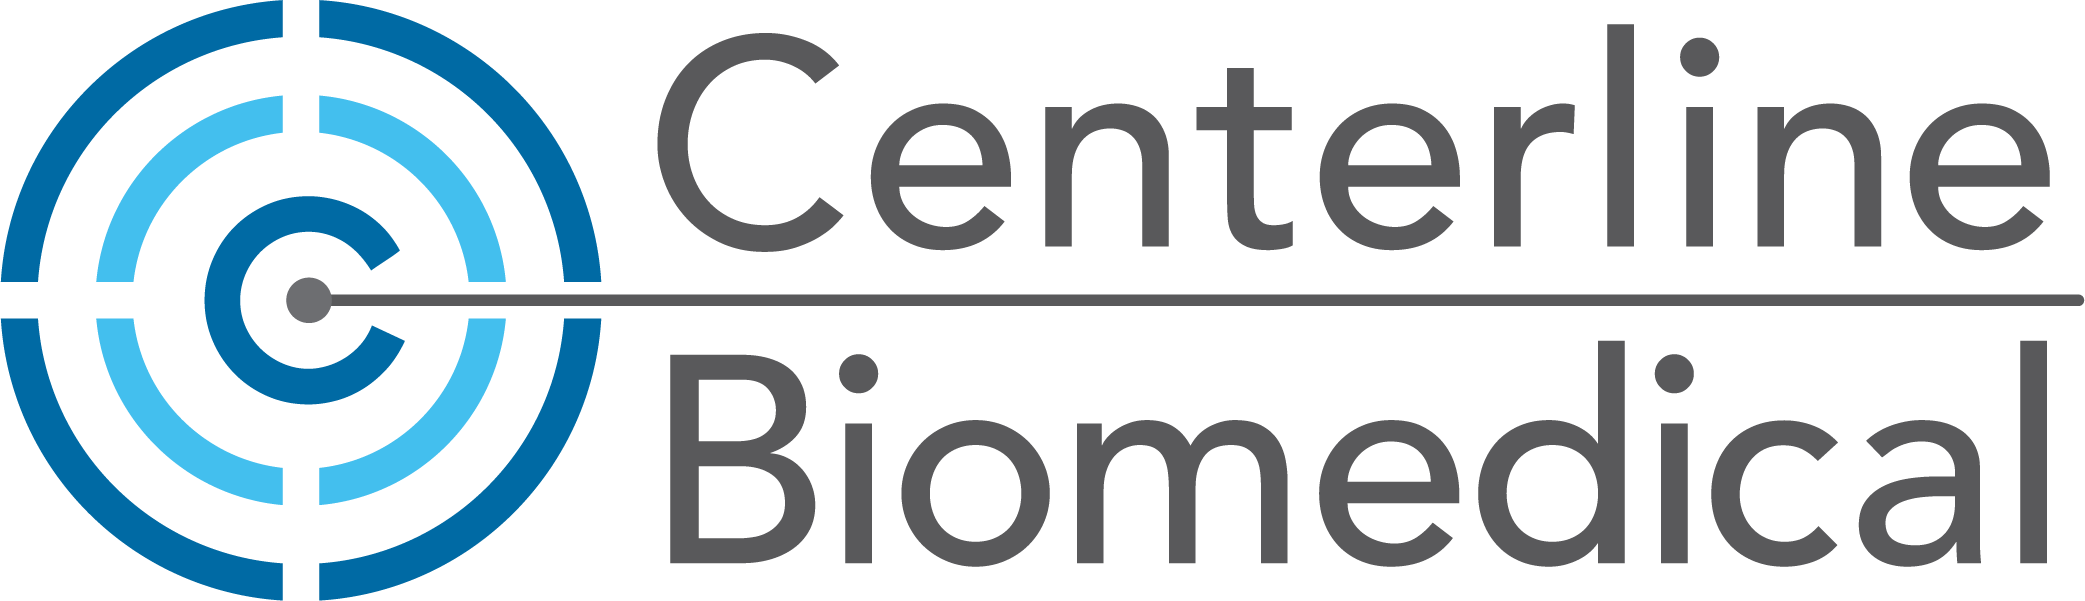 Centerline Biomedical, Inc. logo